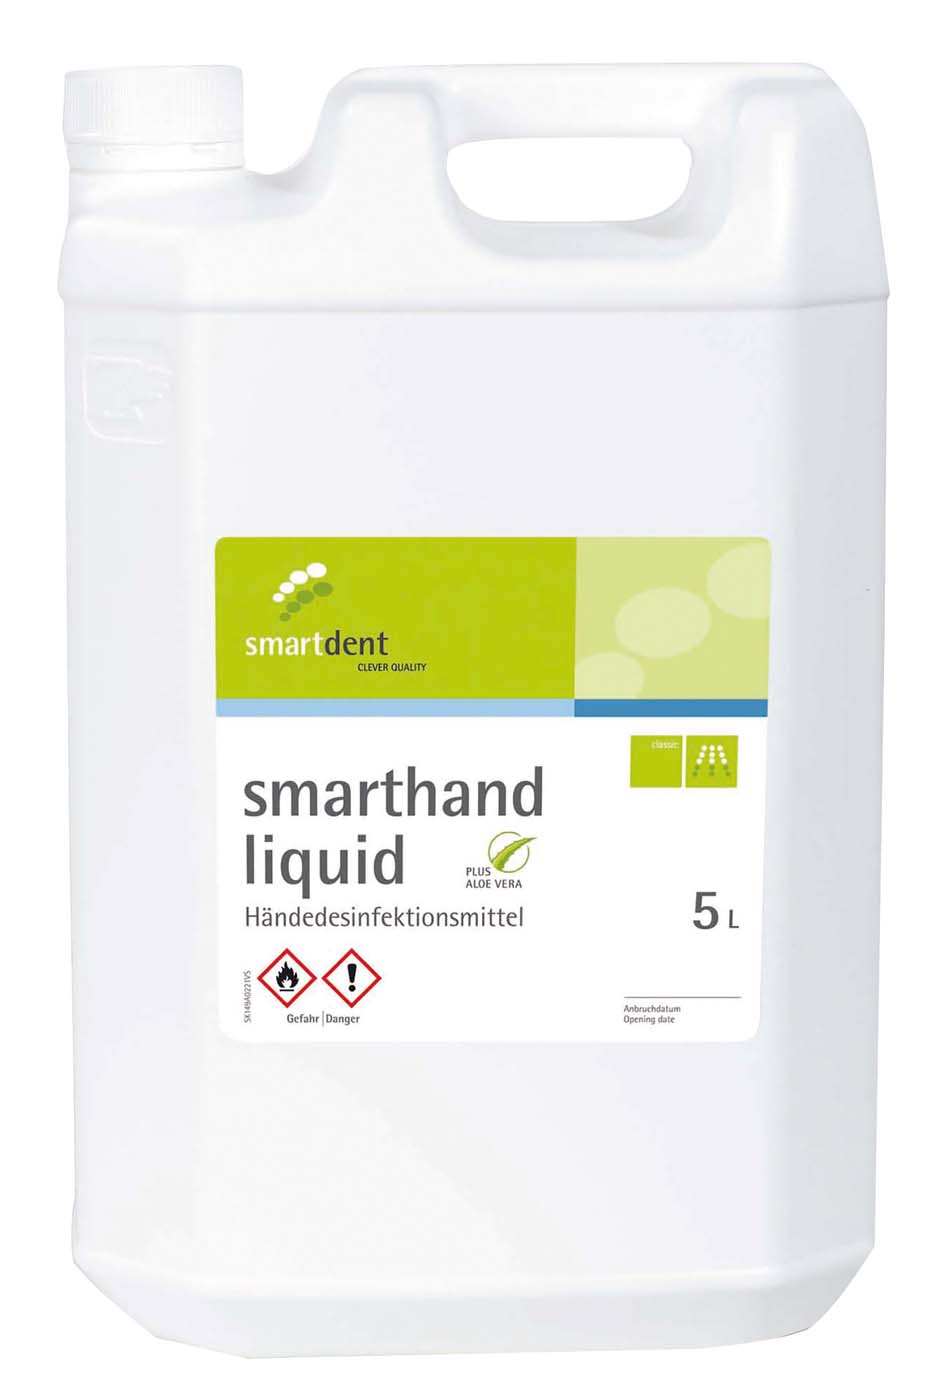 smarthand liquid smartdent